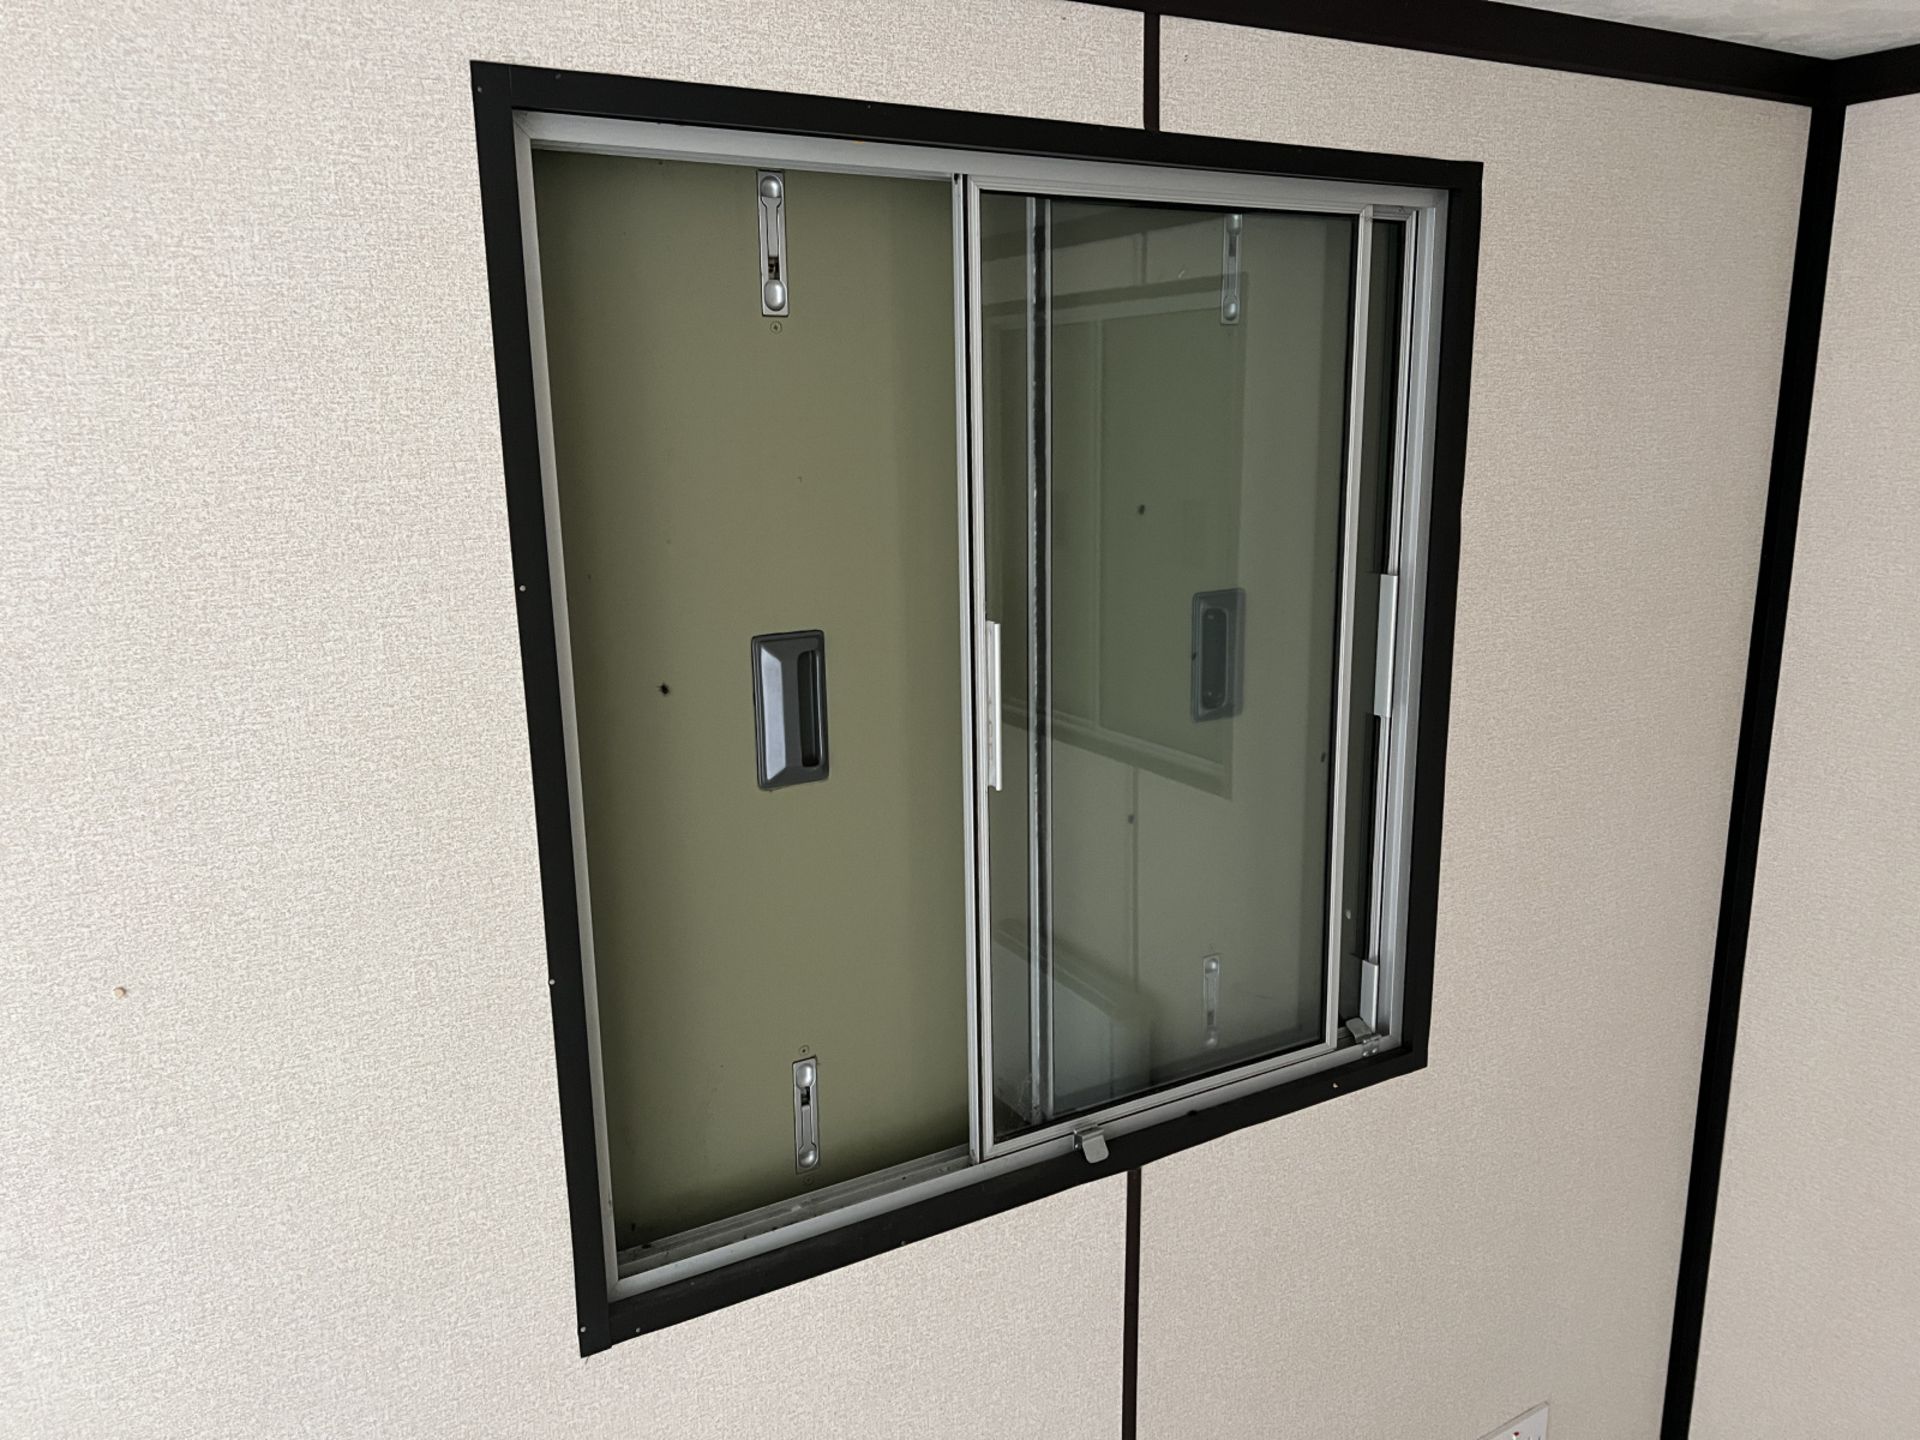 30 foot portacabin office suite - 230V fuse board, 5x tubular lighting, 2x heaters, 3x windows - Image 11 of 15